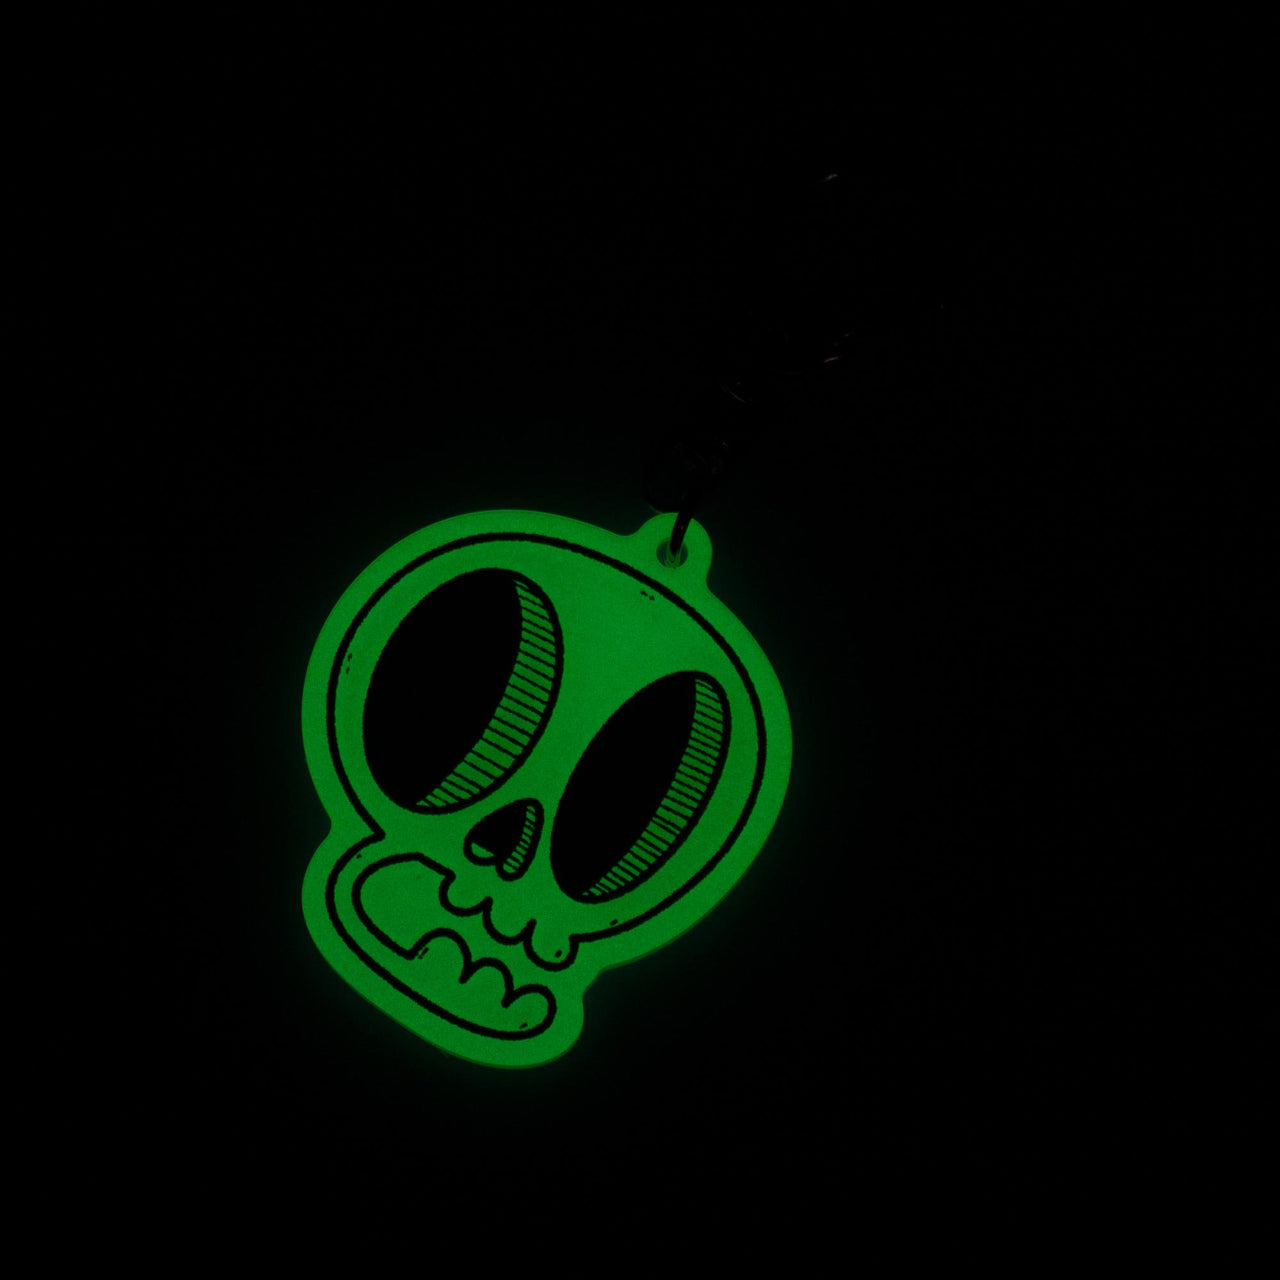 Glow-in-the-Dark Skull Keychain